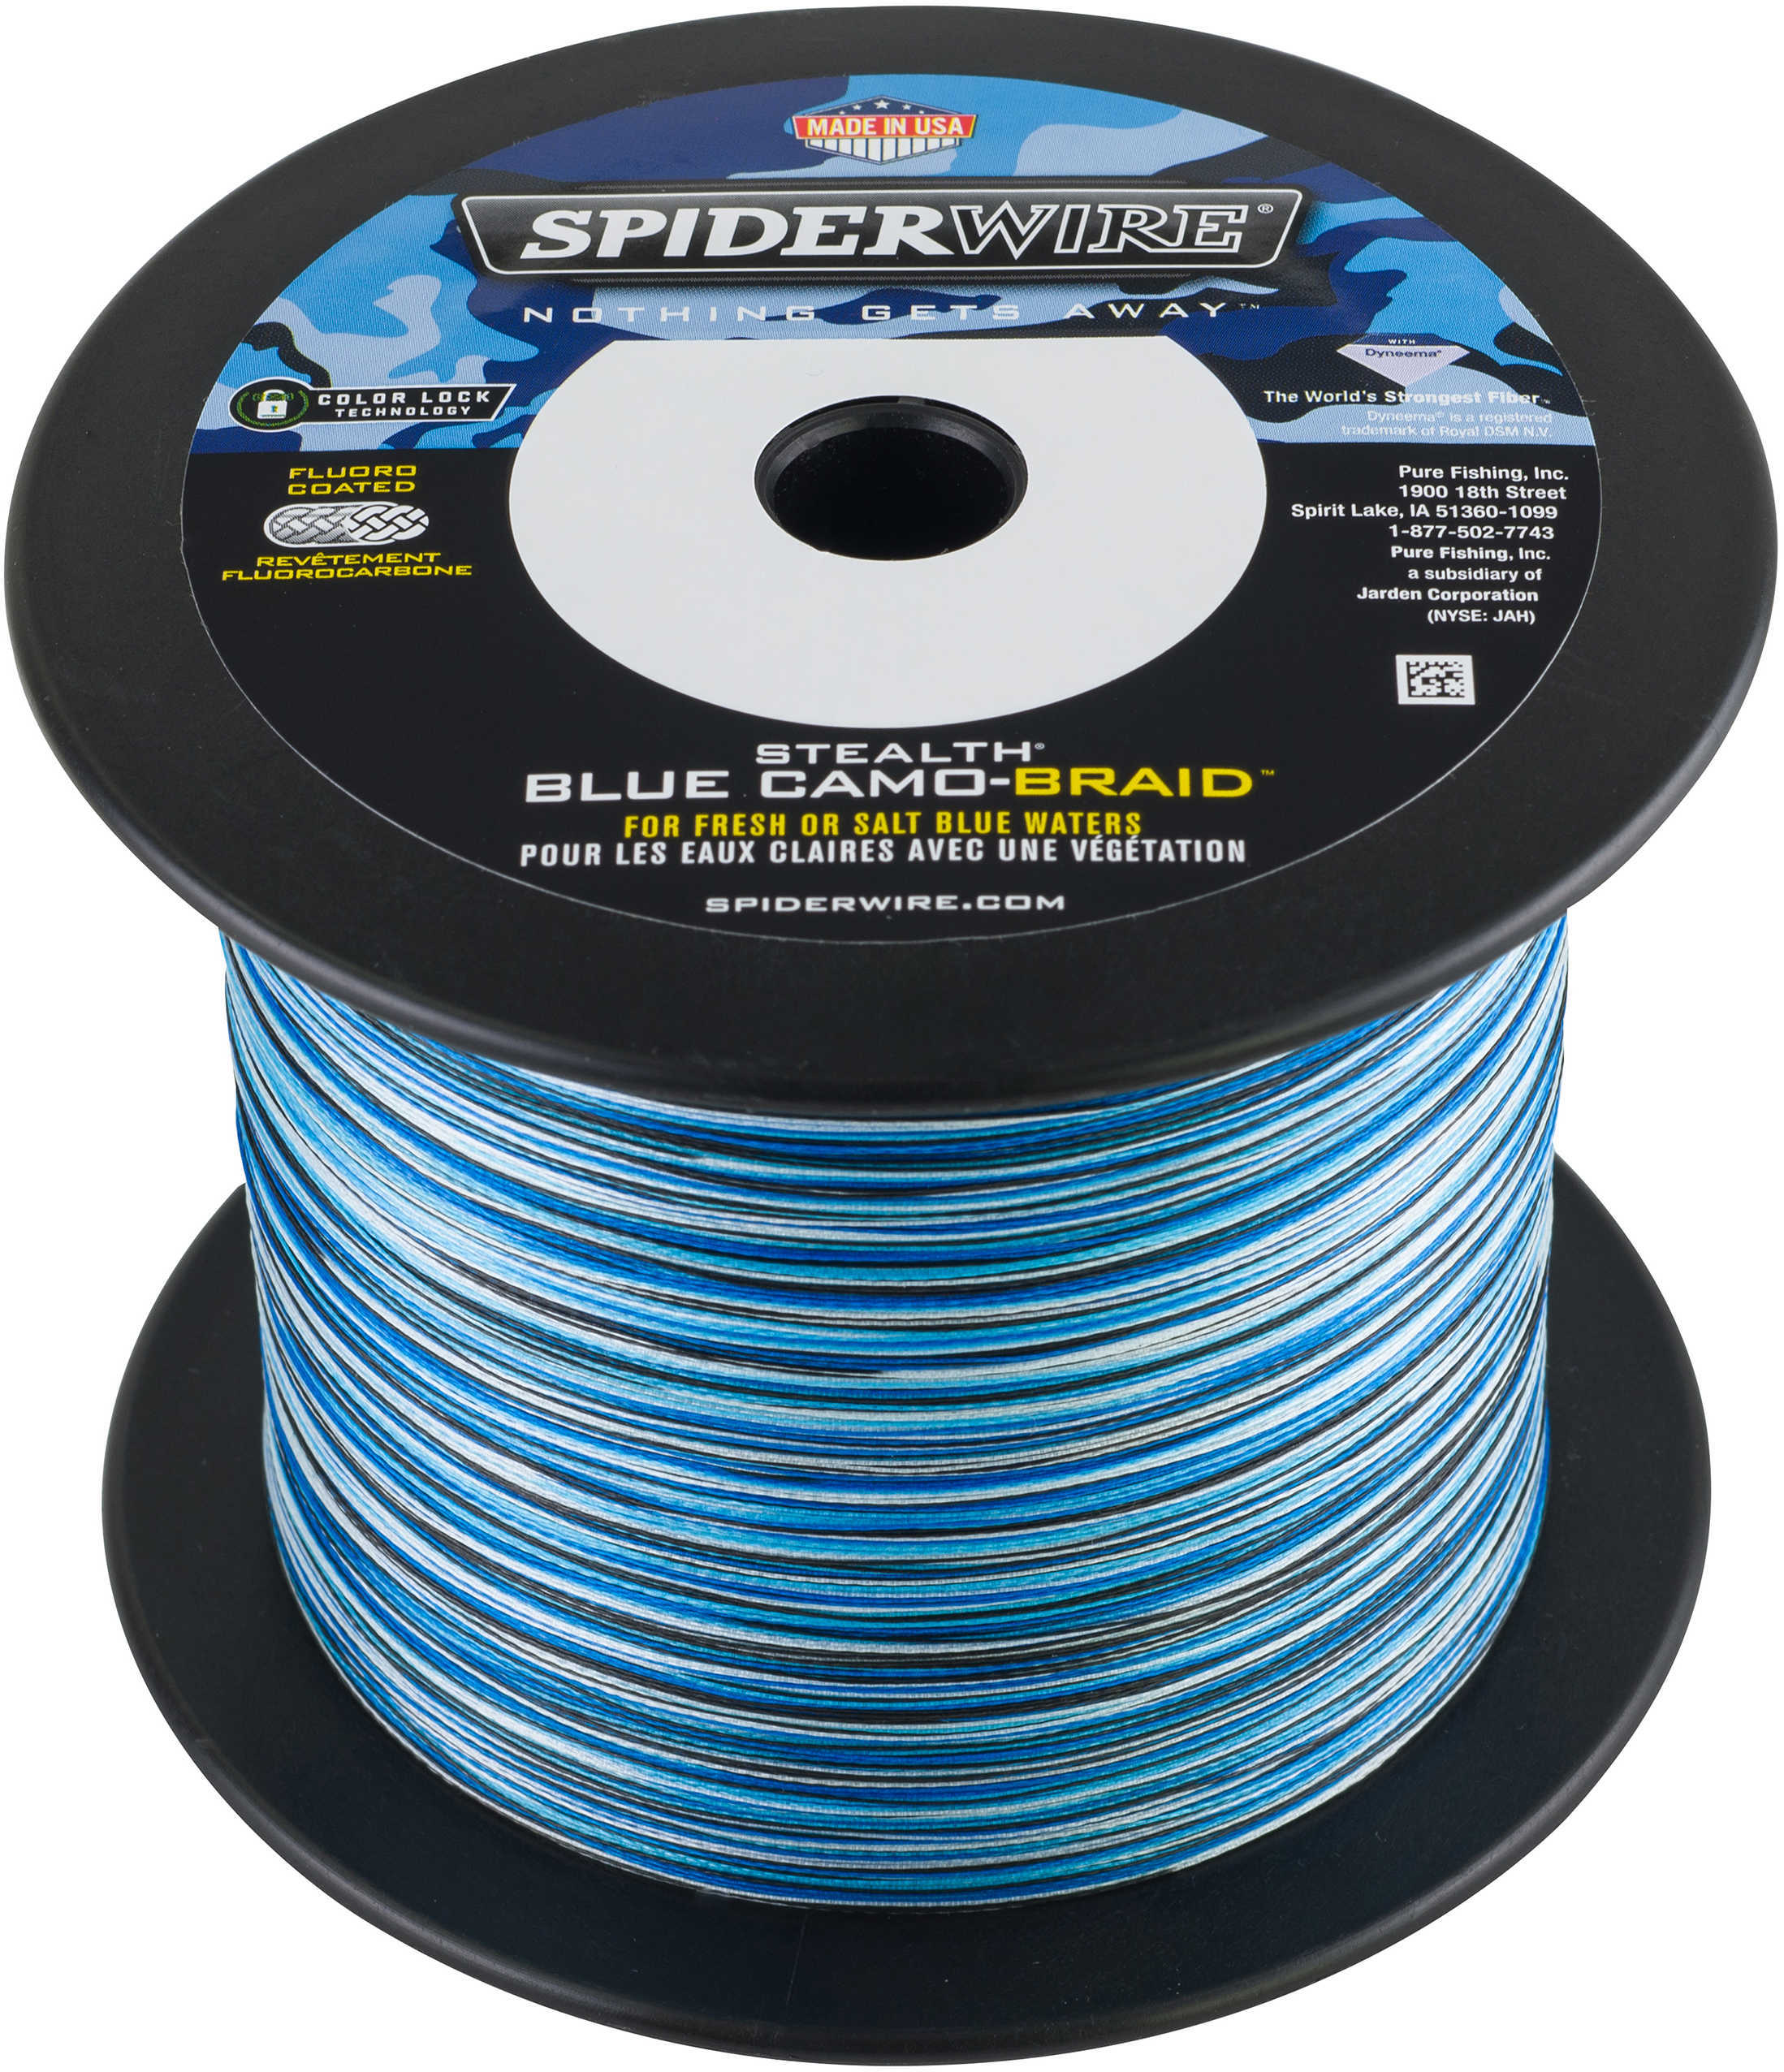 Spiderwire Stealth Braid 1500 Yards lbs Strength 0.009" Diameter Blue Camo Md: 1370454